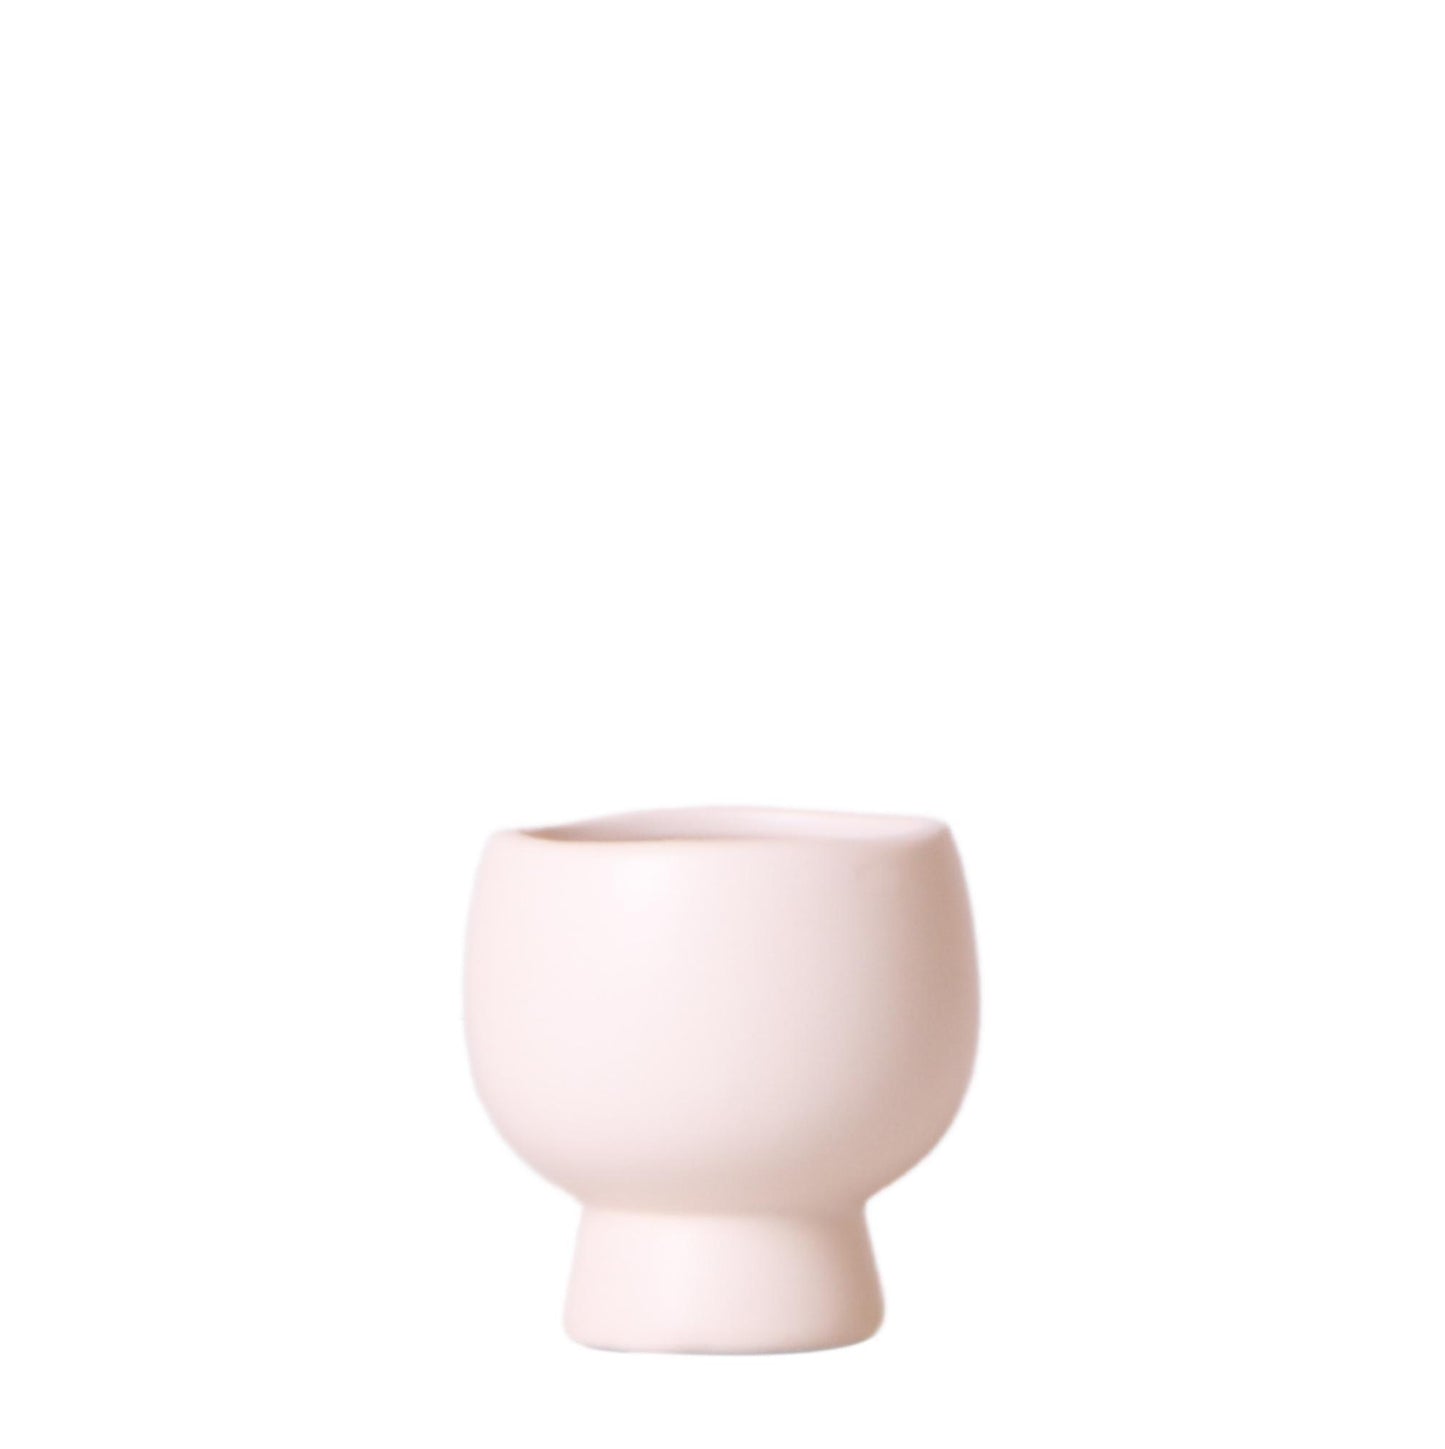 Hummingbird Home | Scandic white flowerpot - White ceramic decorative pot - pot size Ø6cm